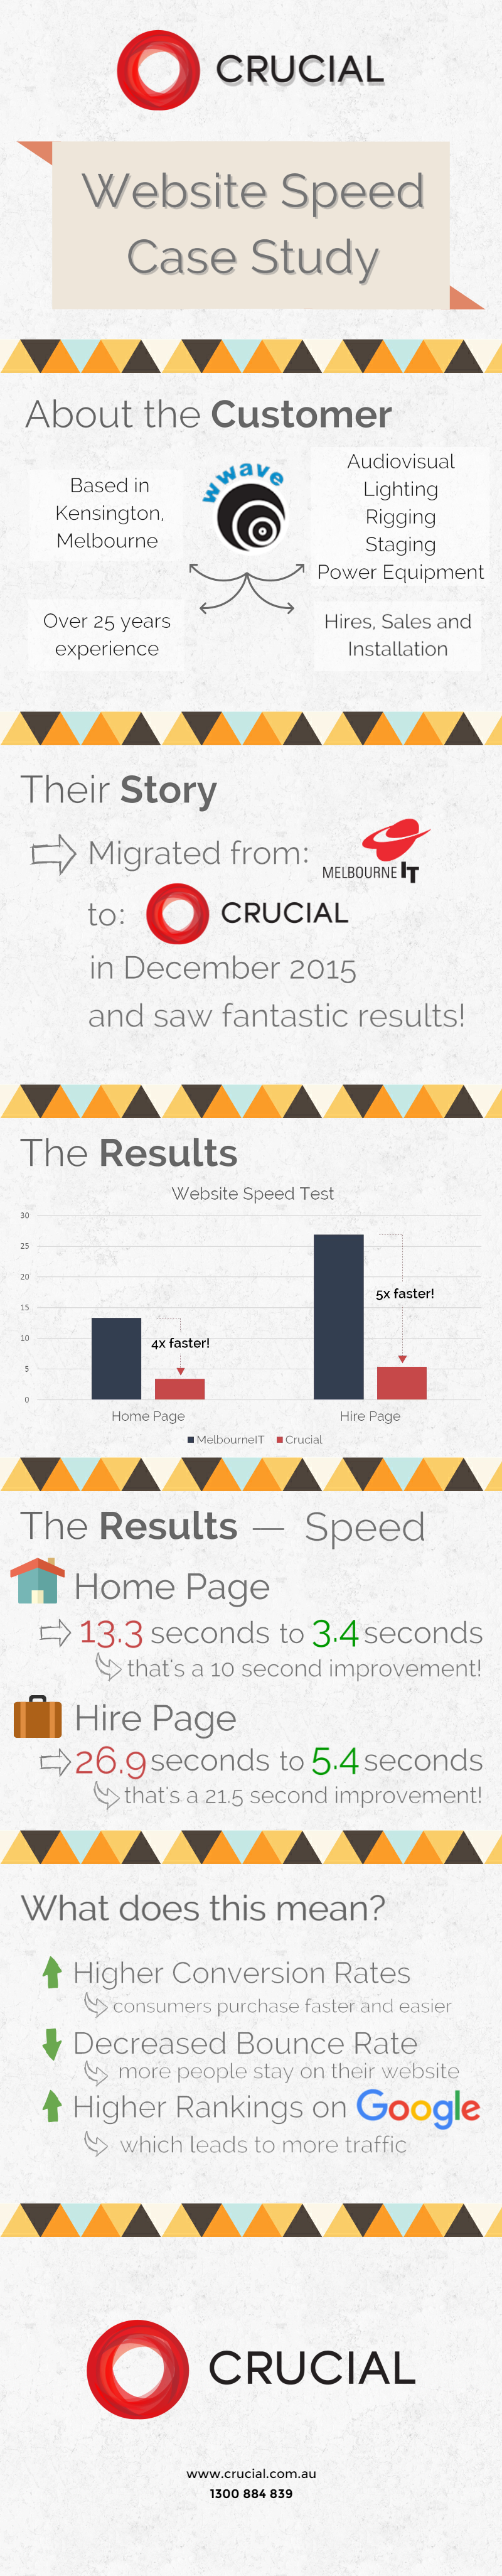 Website Speed Case Study | Broadcast | Crucial